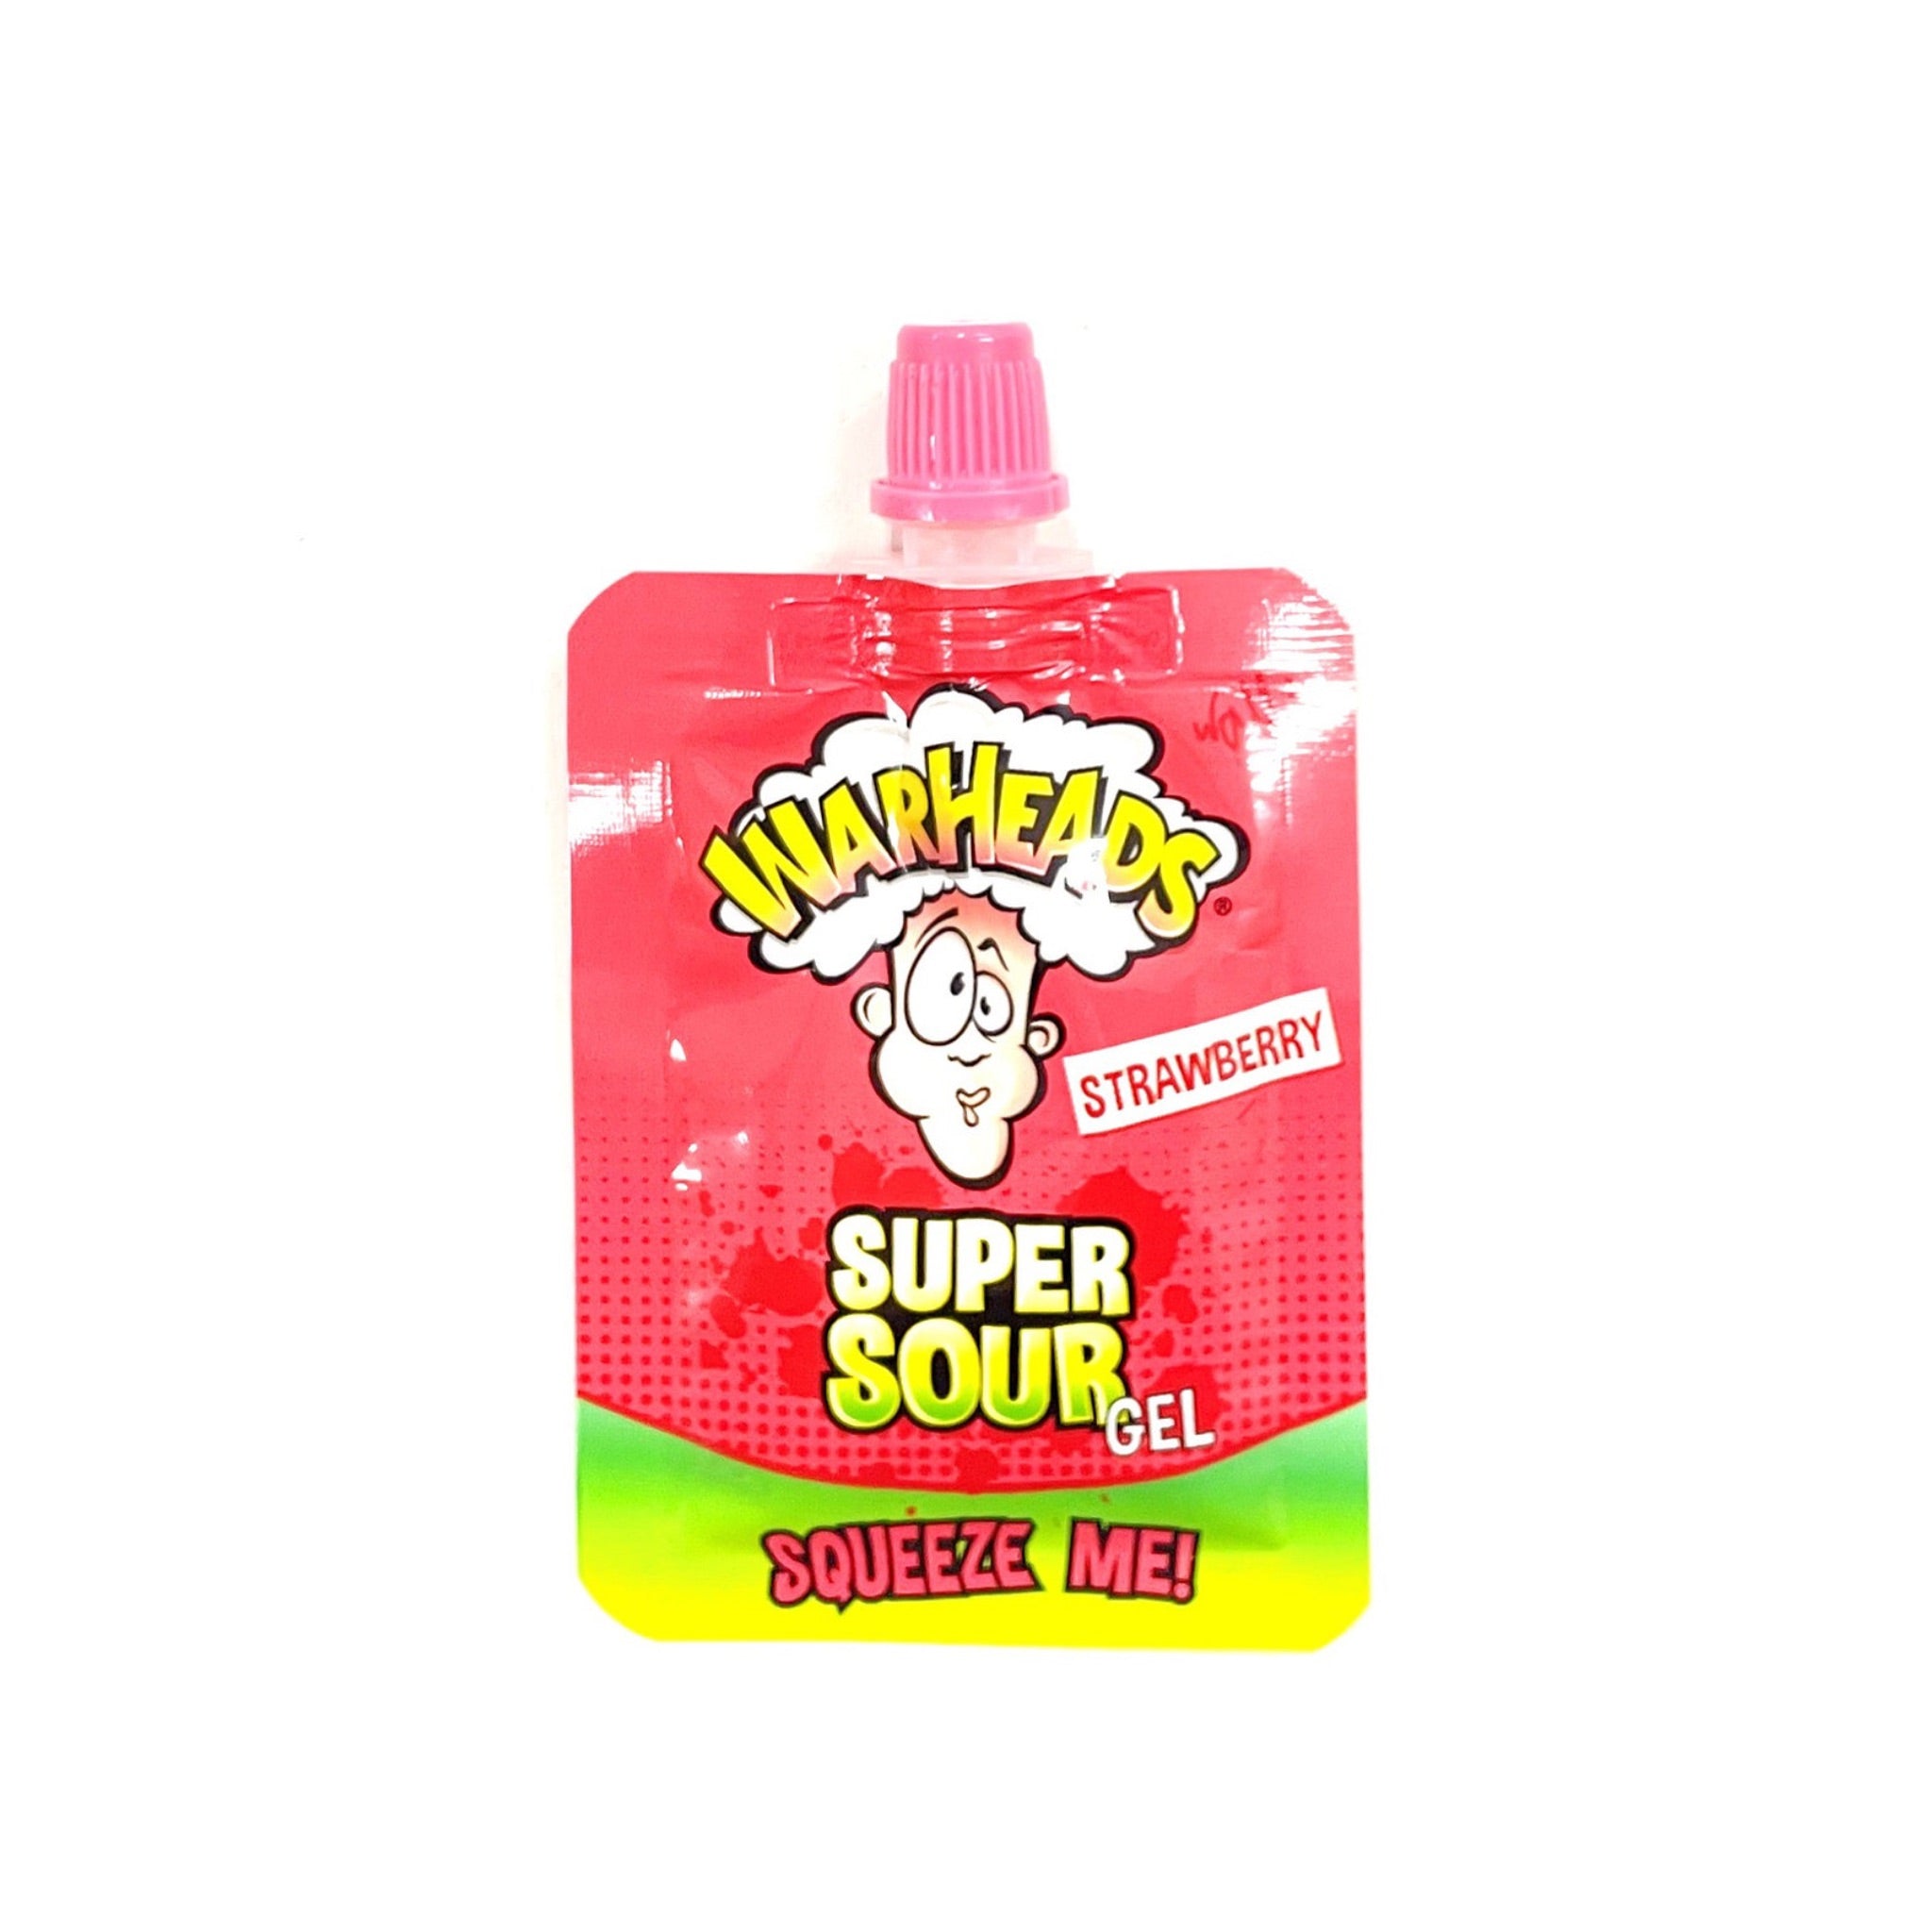 Warheads Super sour gel strawberry